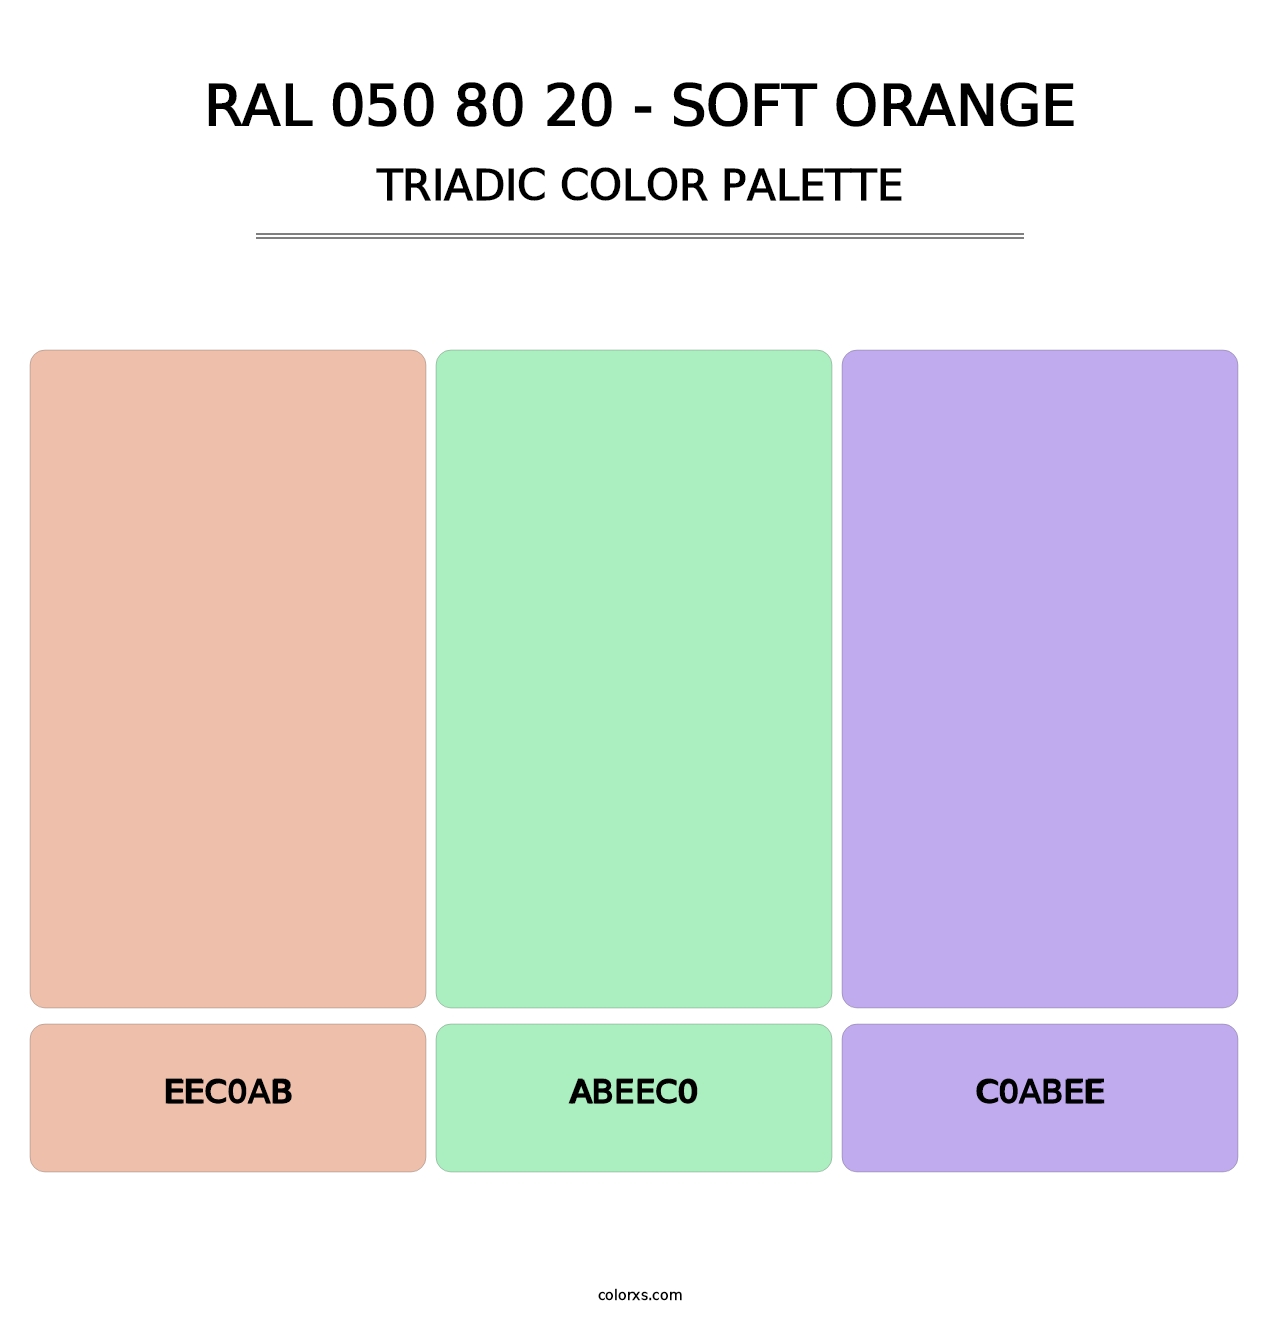 RAL 050 80 20 - Soft Orange - Triadic Color Palette